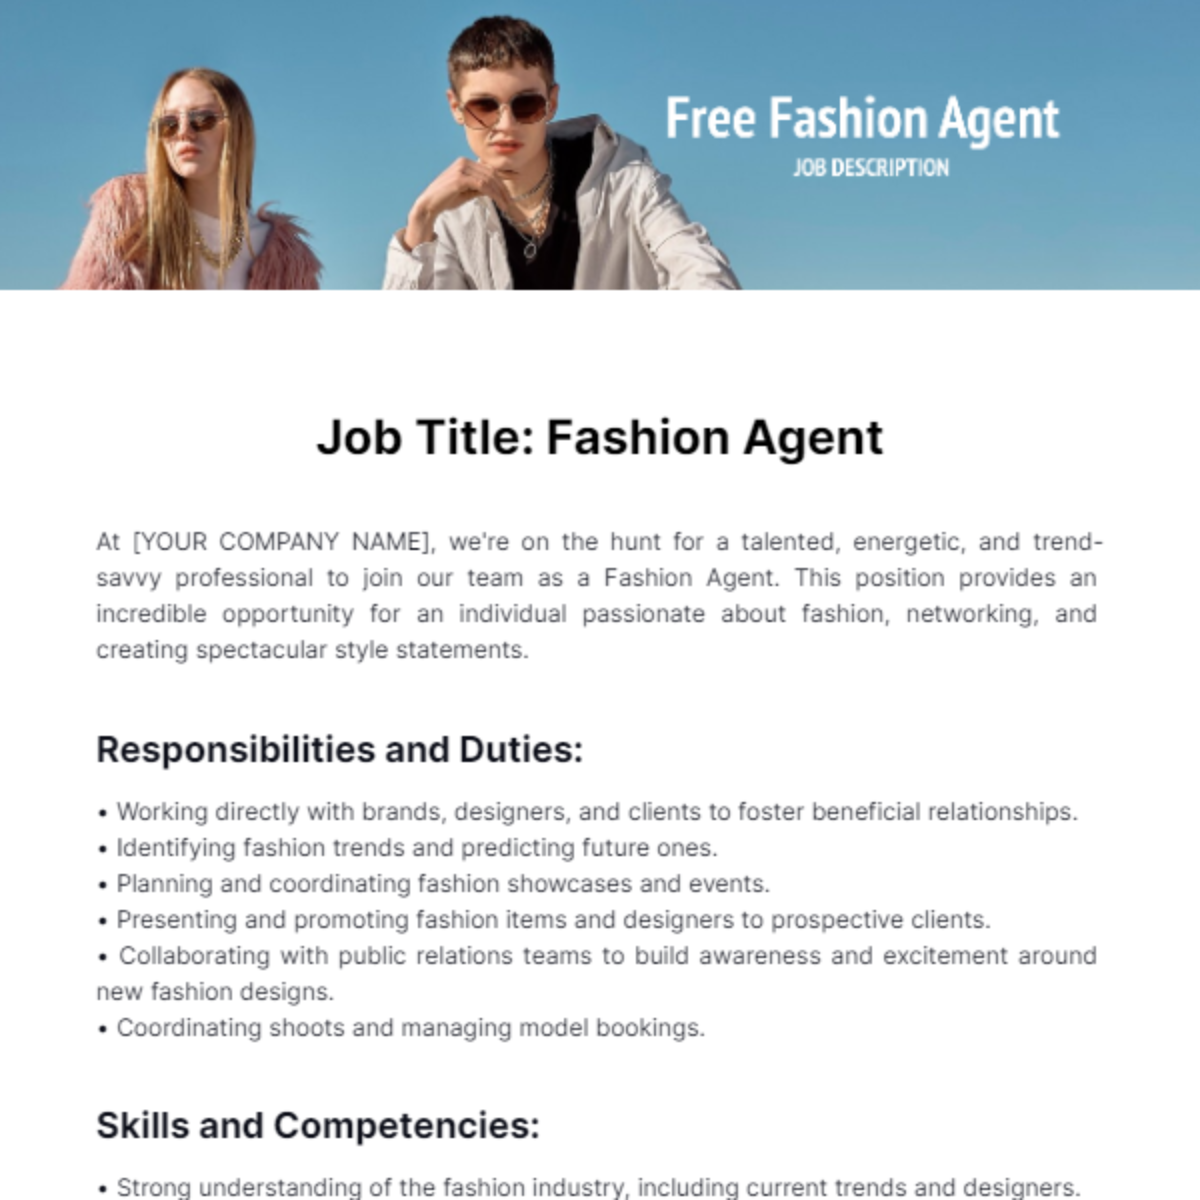 Free Fashion Agent Job Description Template